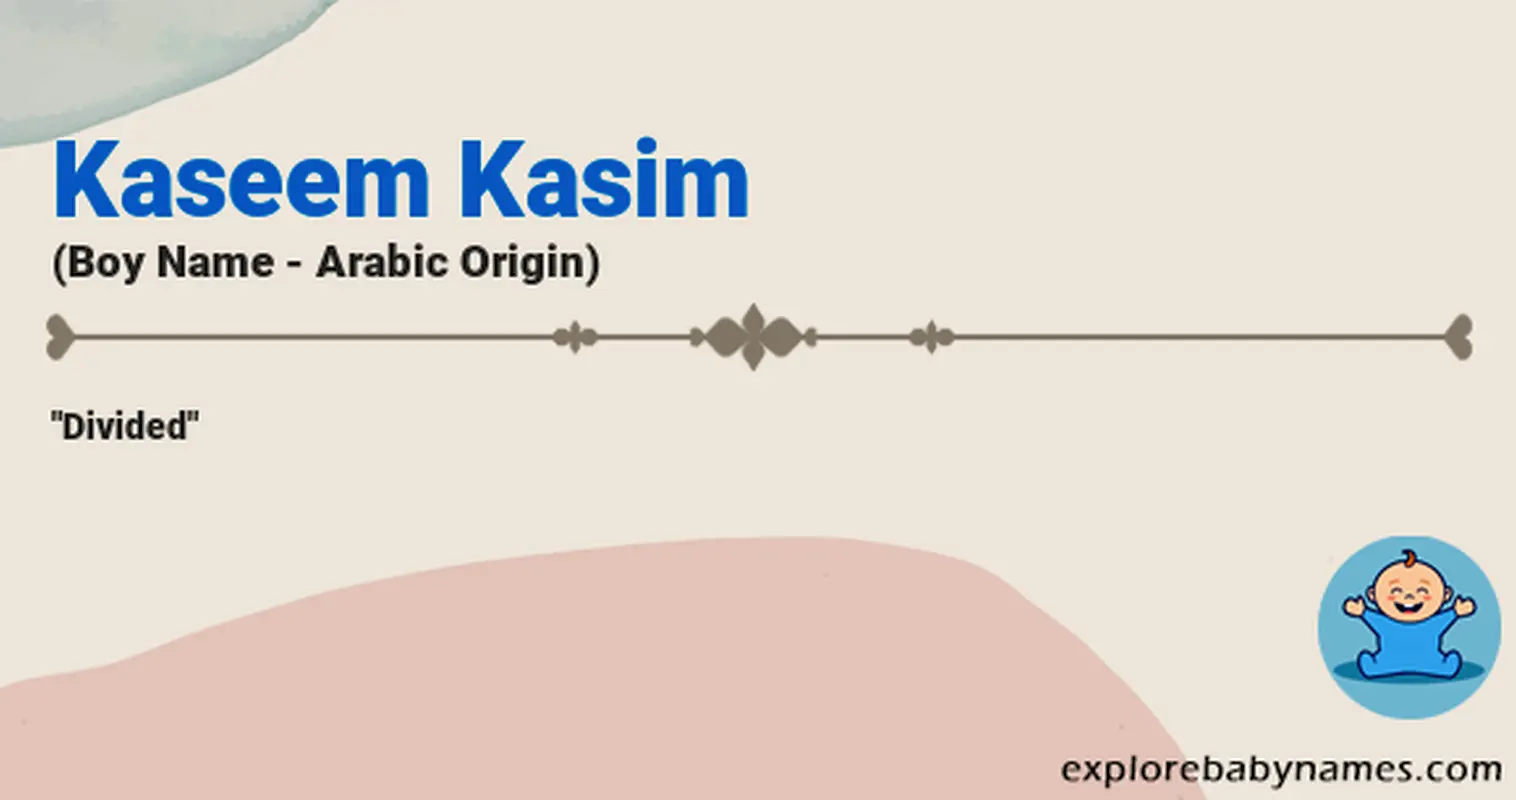 Meaning of Kaseem Kasim